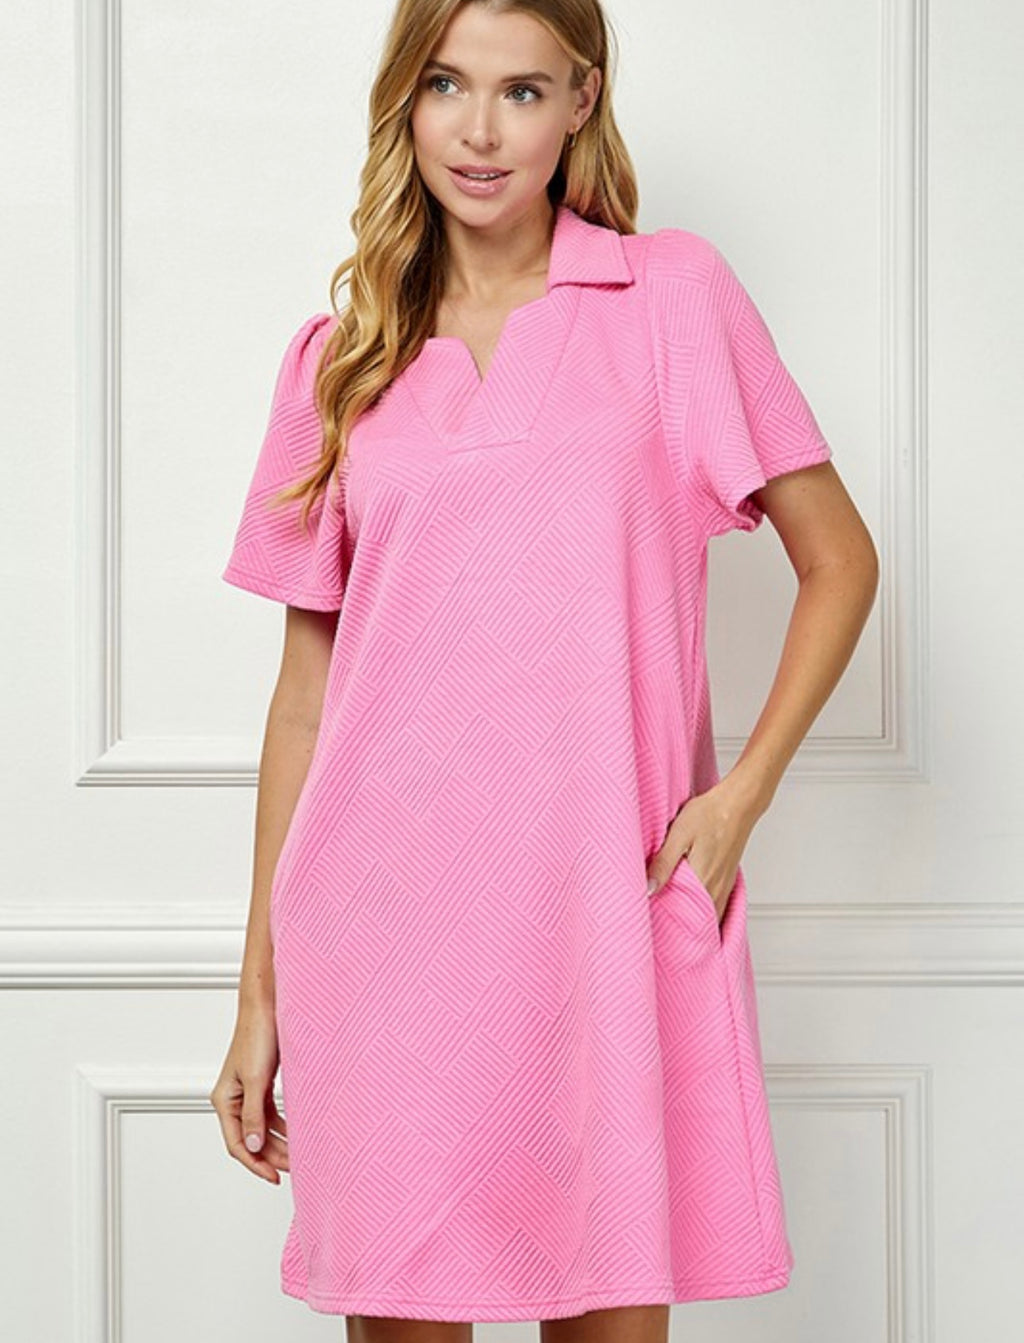 Pink Collared Textured Dress